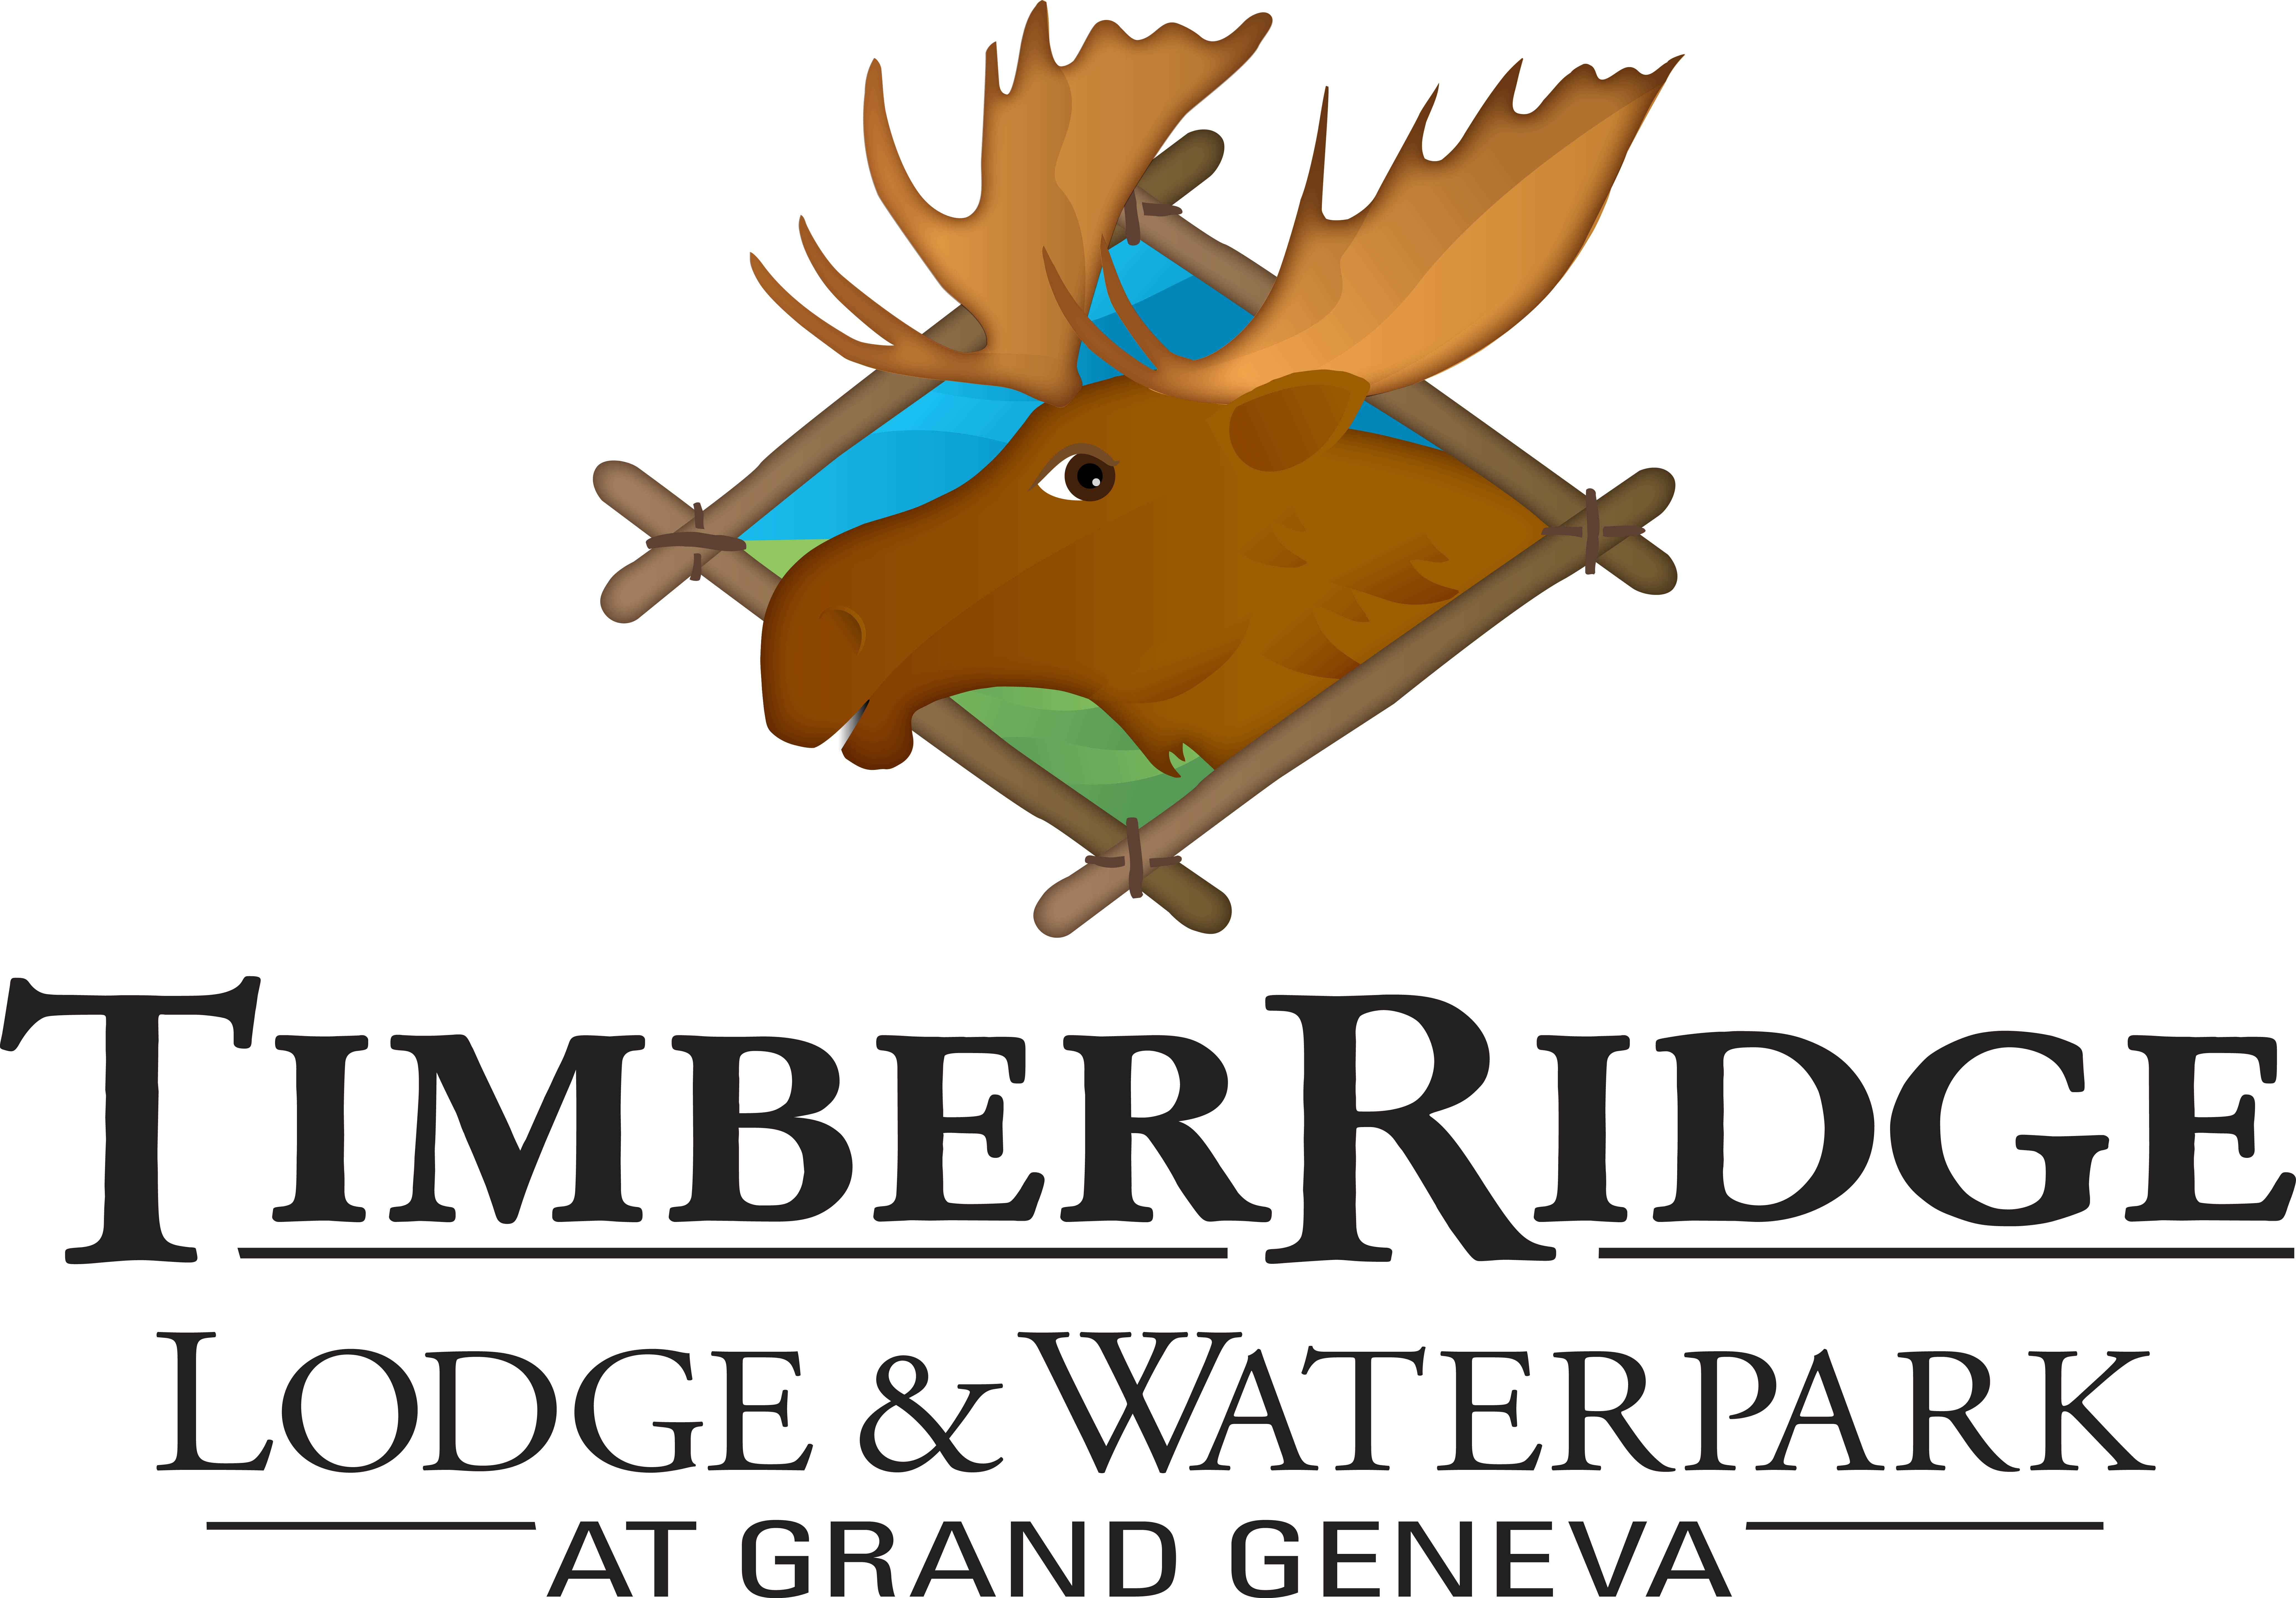 Timber Ridge Lodge & Waterpark at Grand Geneva